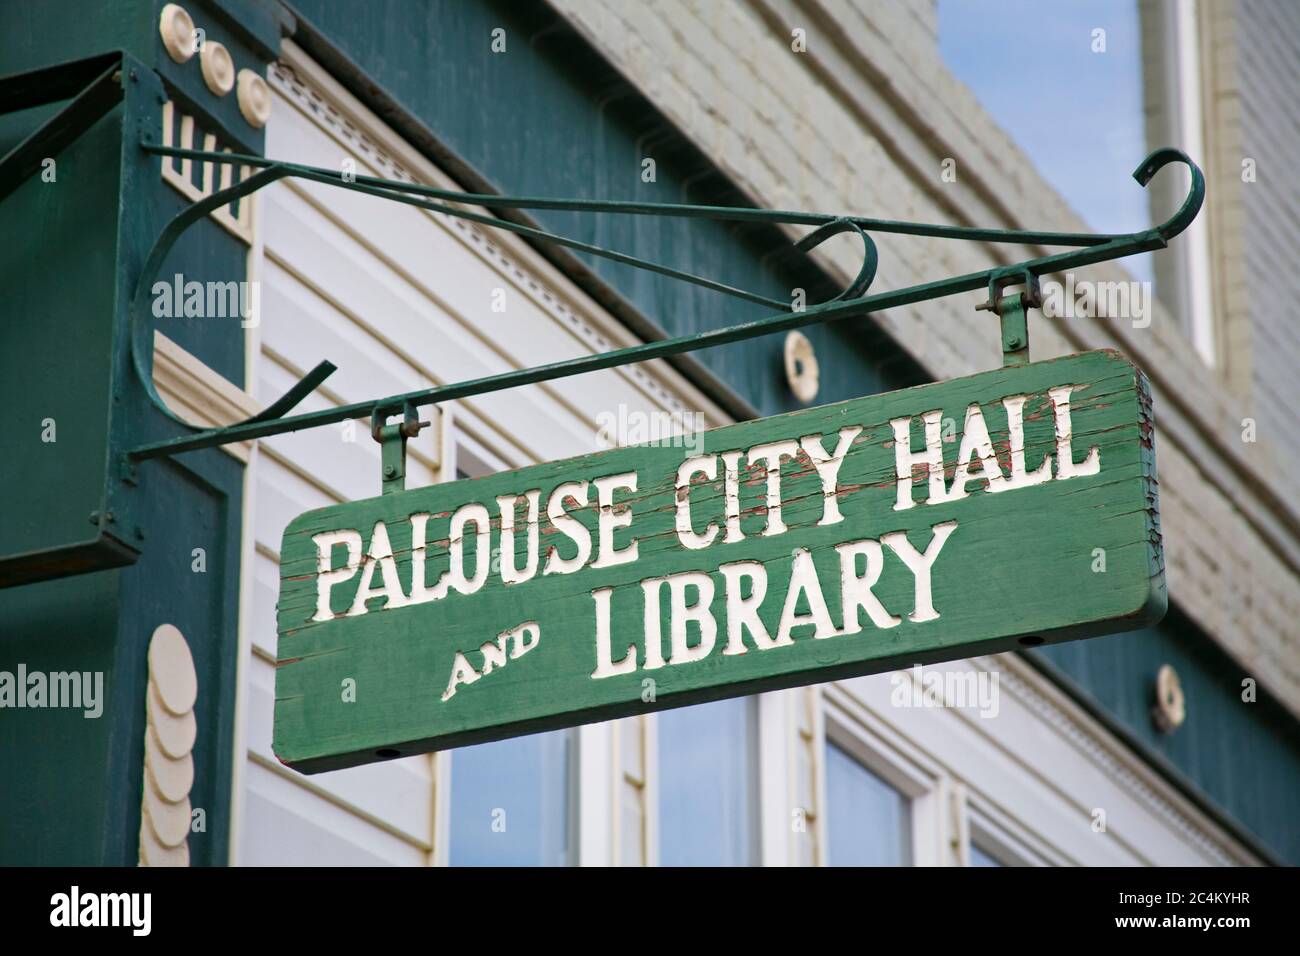 Palouse City Hall & Library, Spokane, Washington State, USA Stock Photo